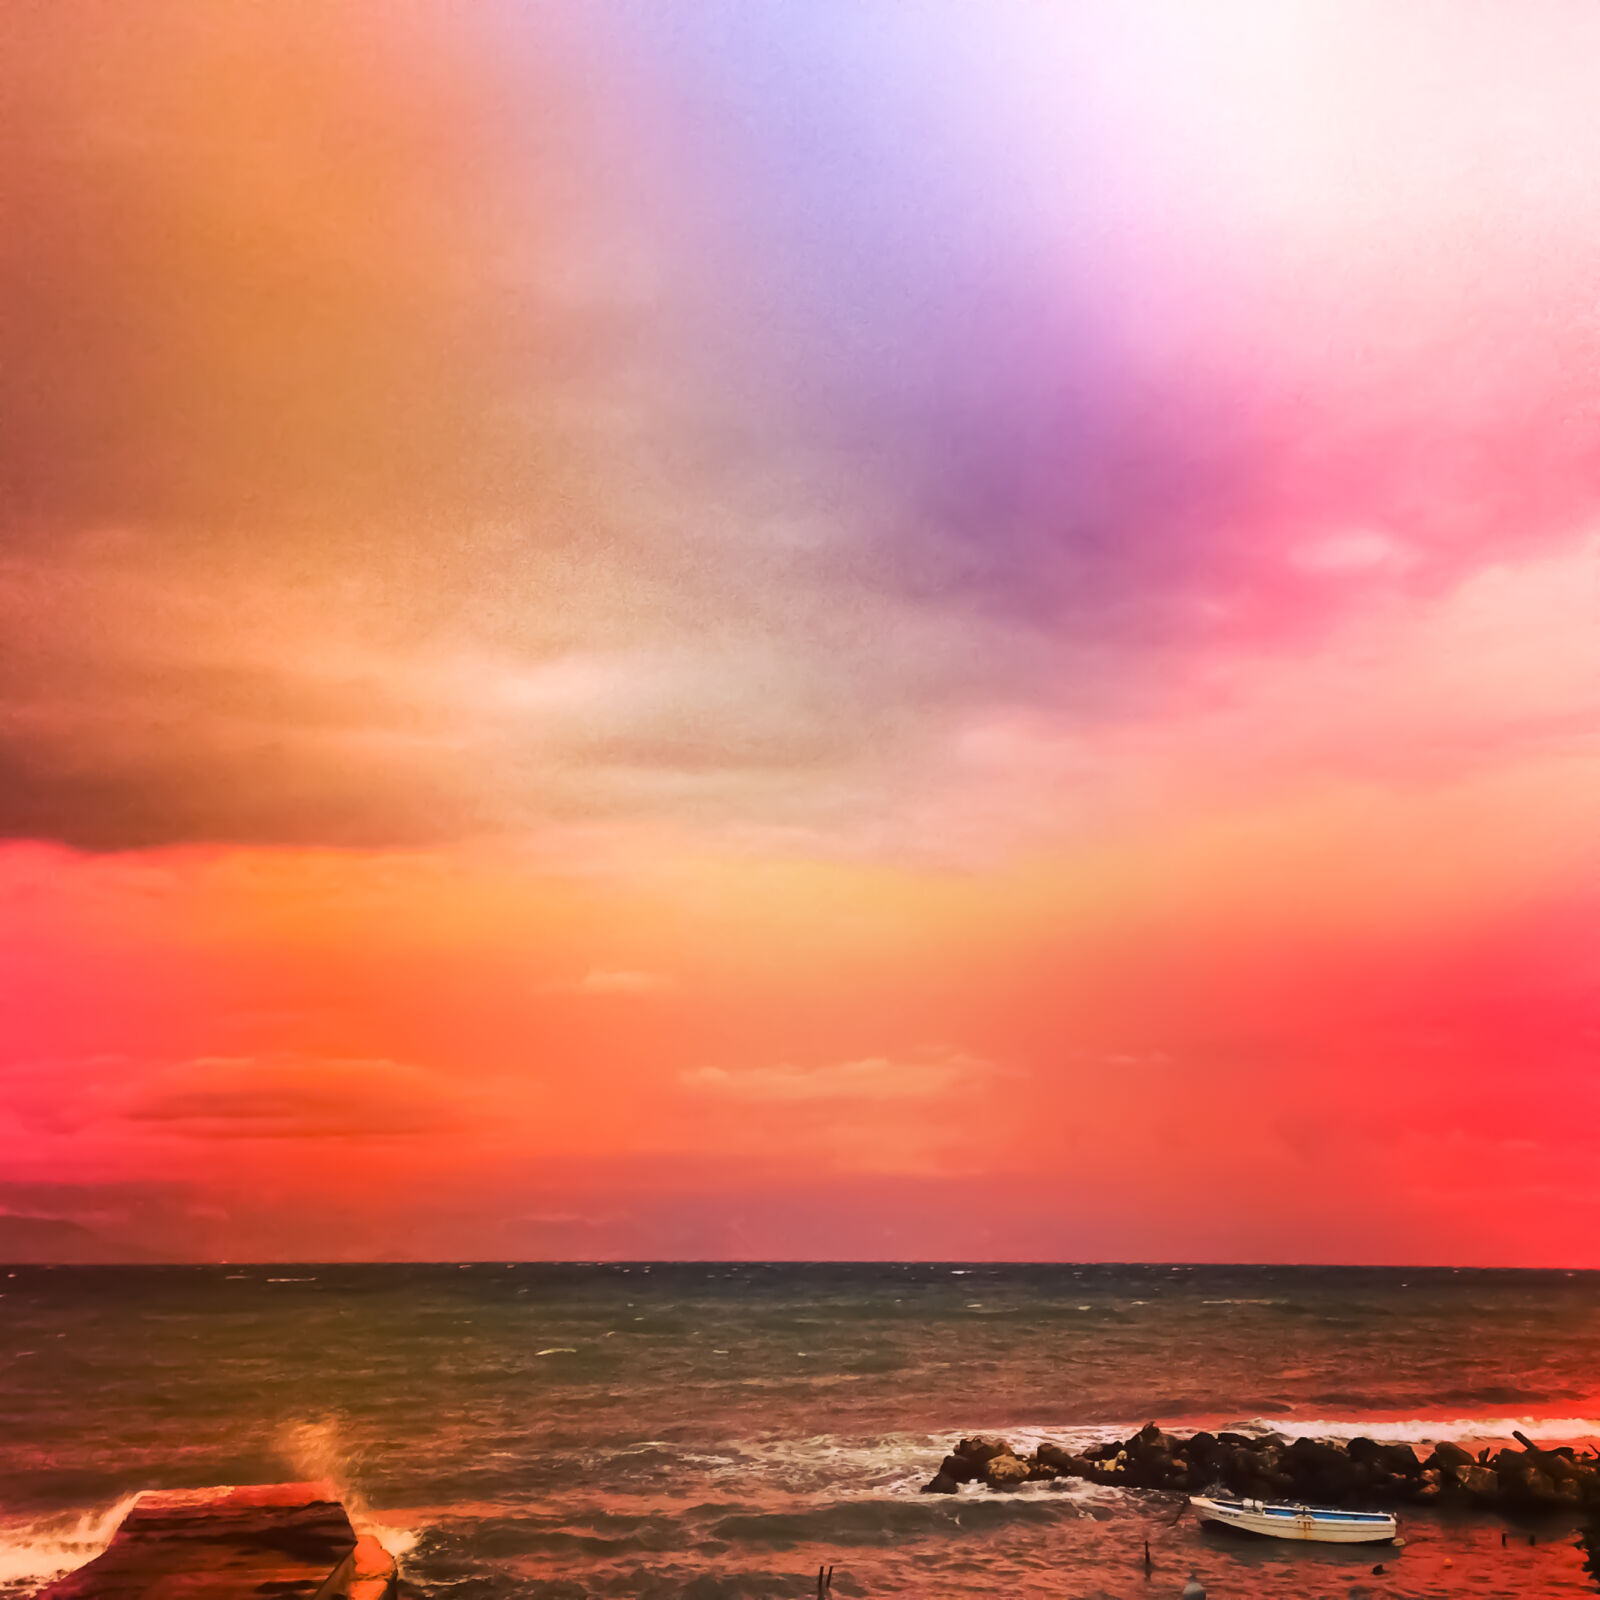 Apple iPhone 5 sample photo. Beach, boat, dusk, evening photography